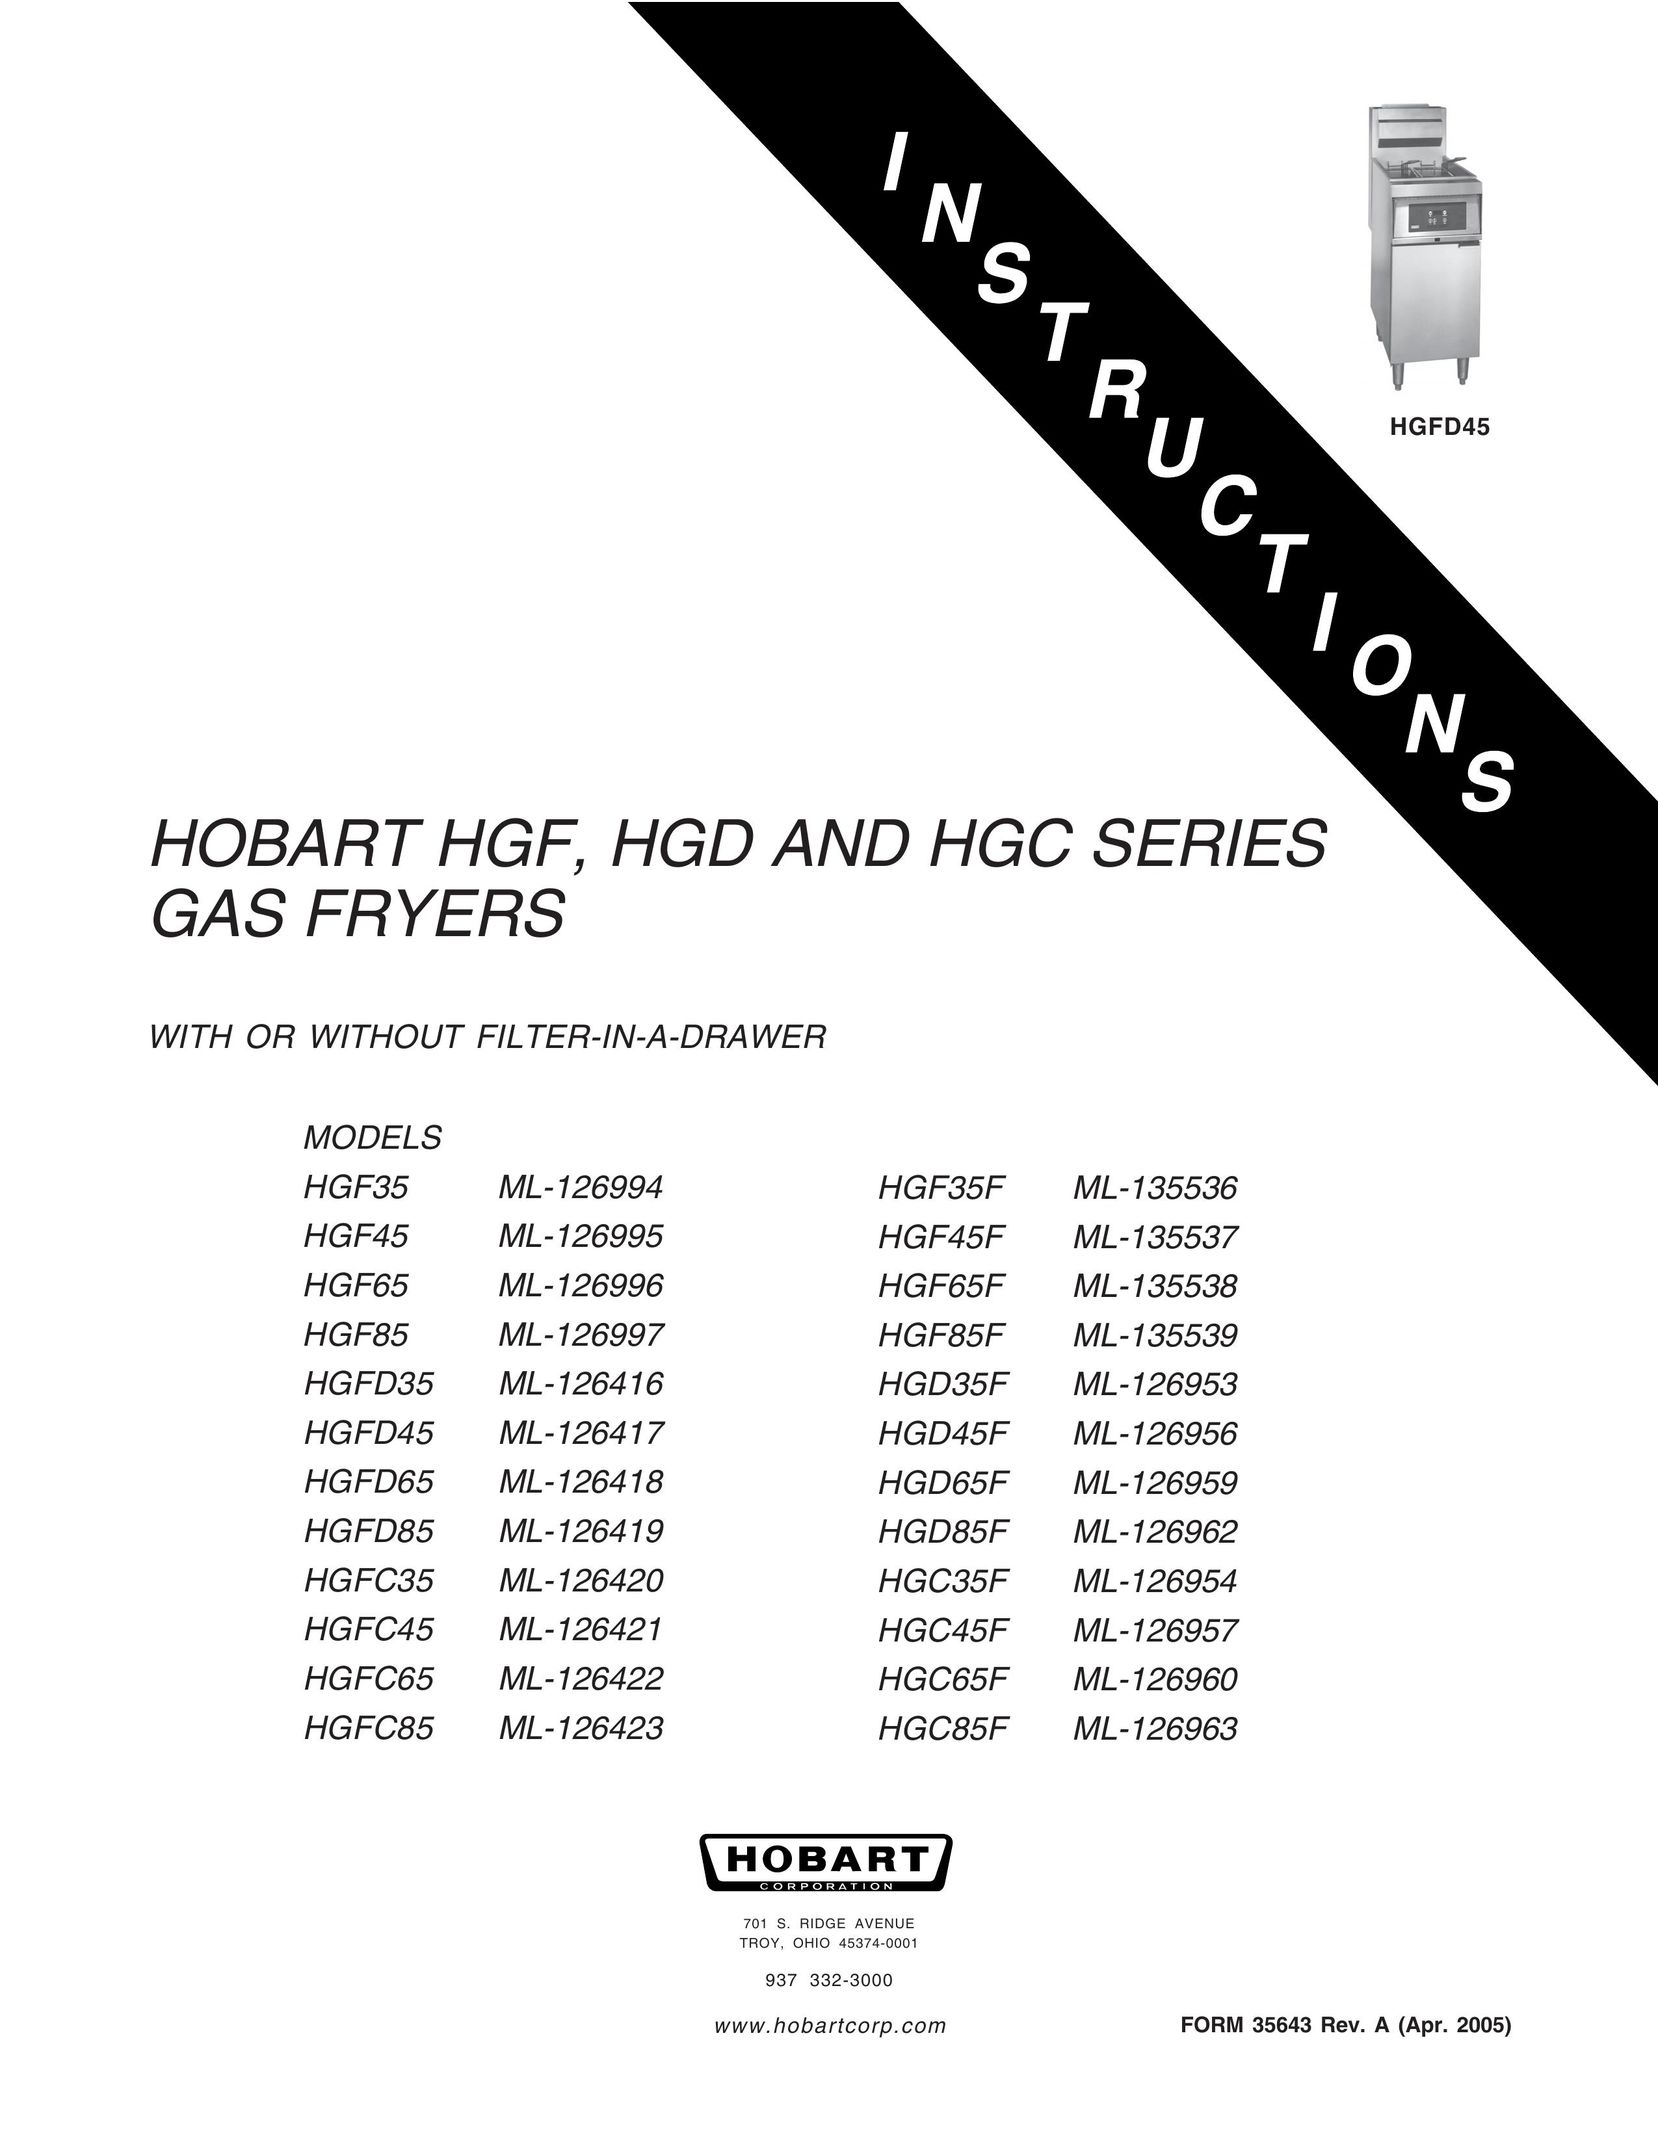 Hobart HGC85F ML-126963 Fryer User Manual